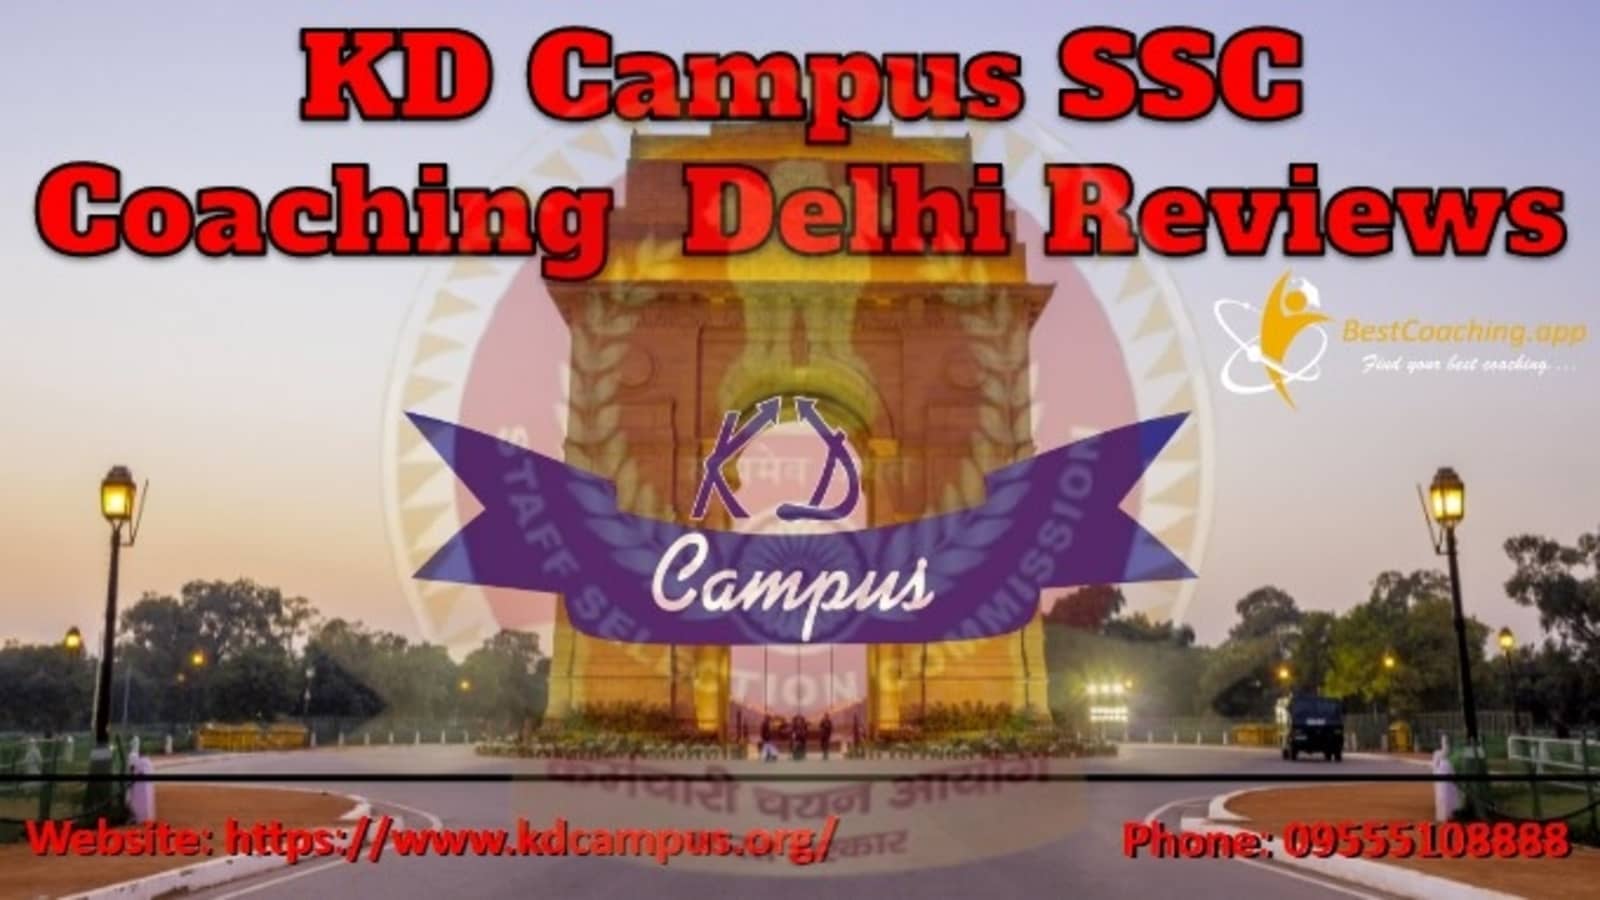 KD Campus SSC Coaching in Delhi